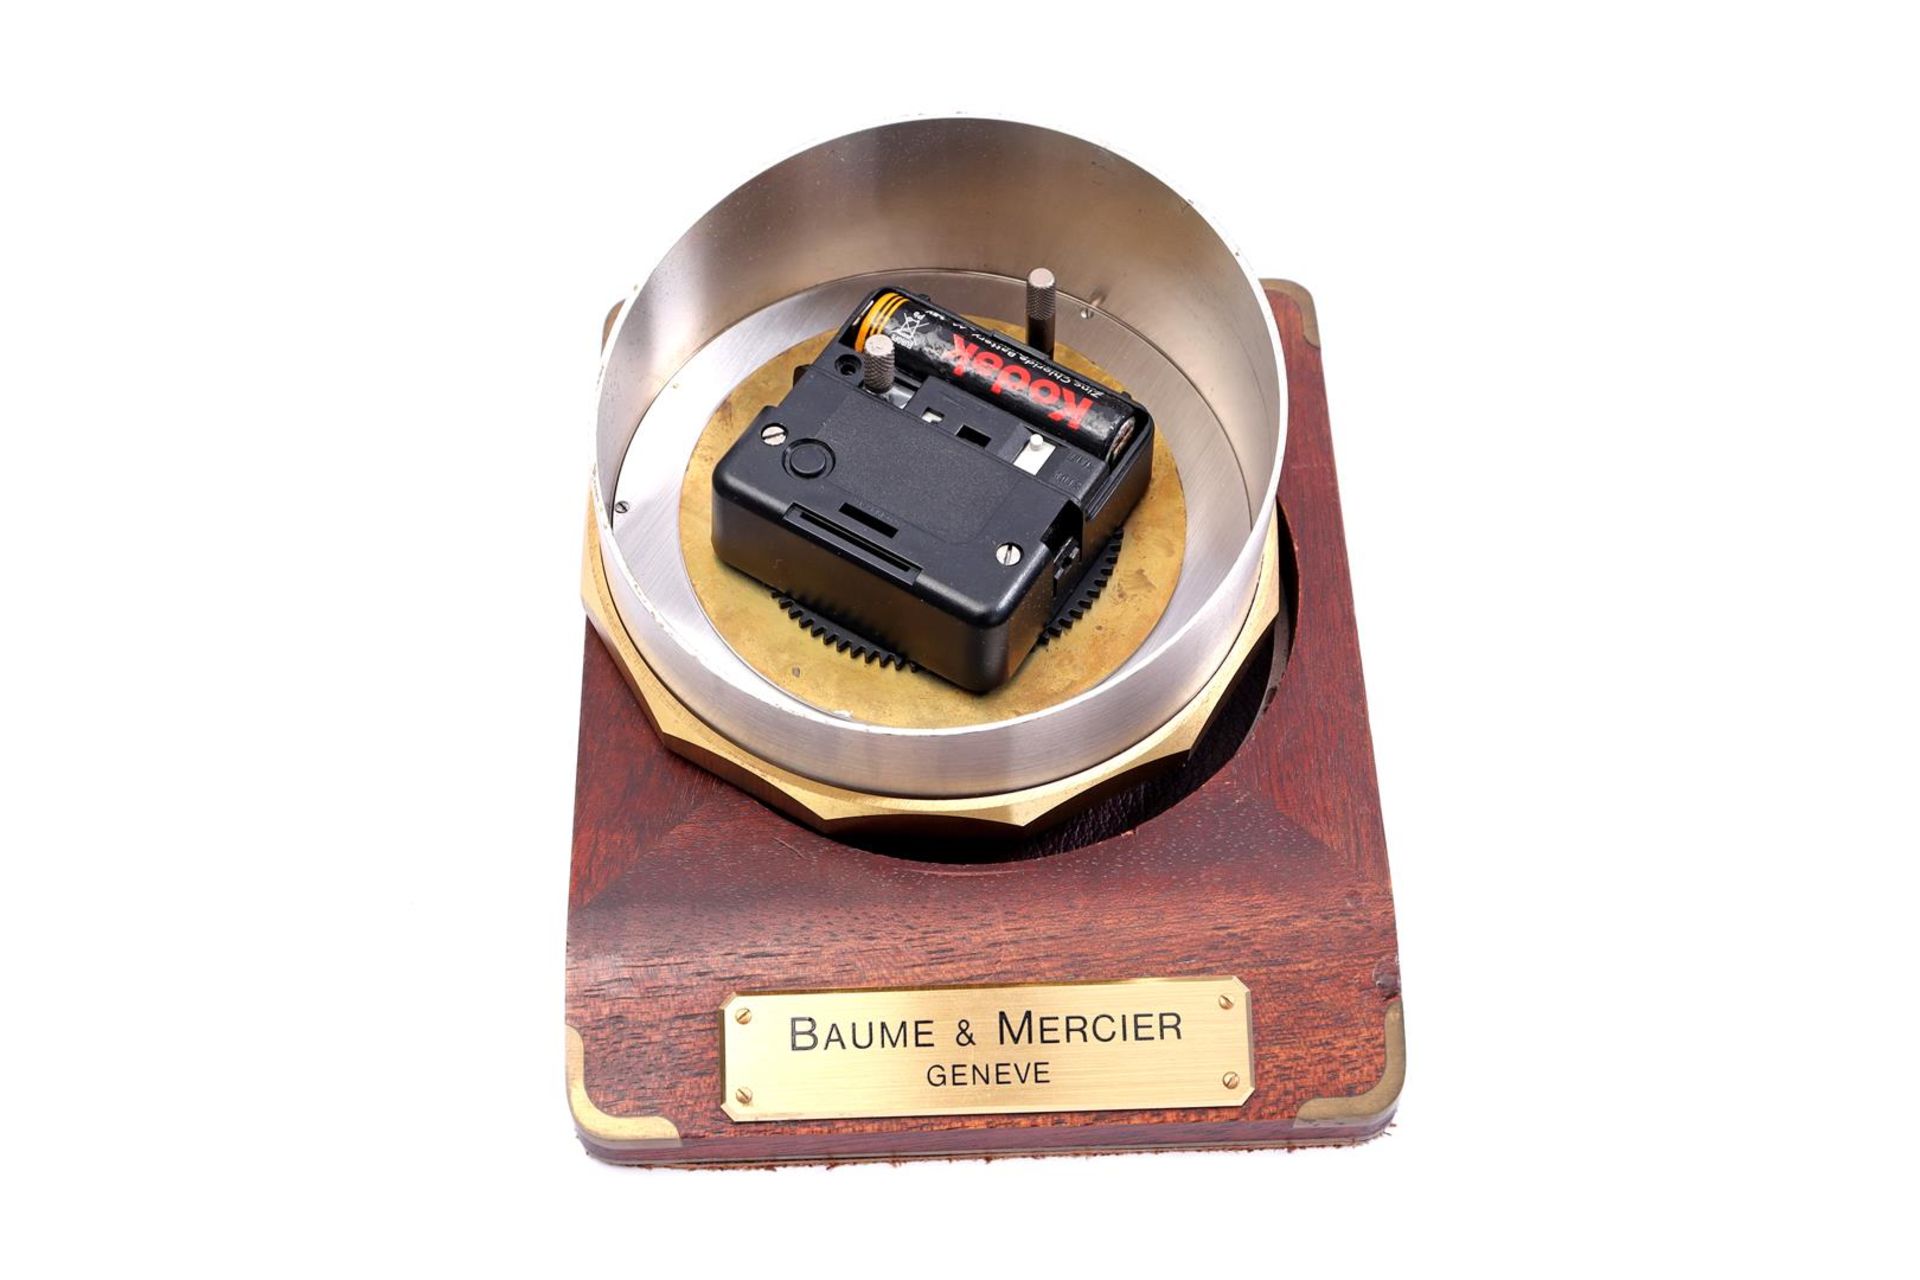 Baume & Mercier Geneve Riviera table clock - Image 2 of 2